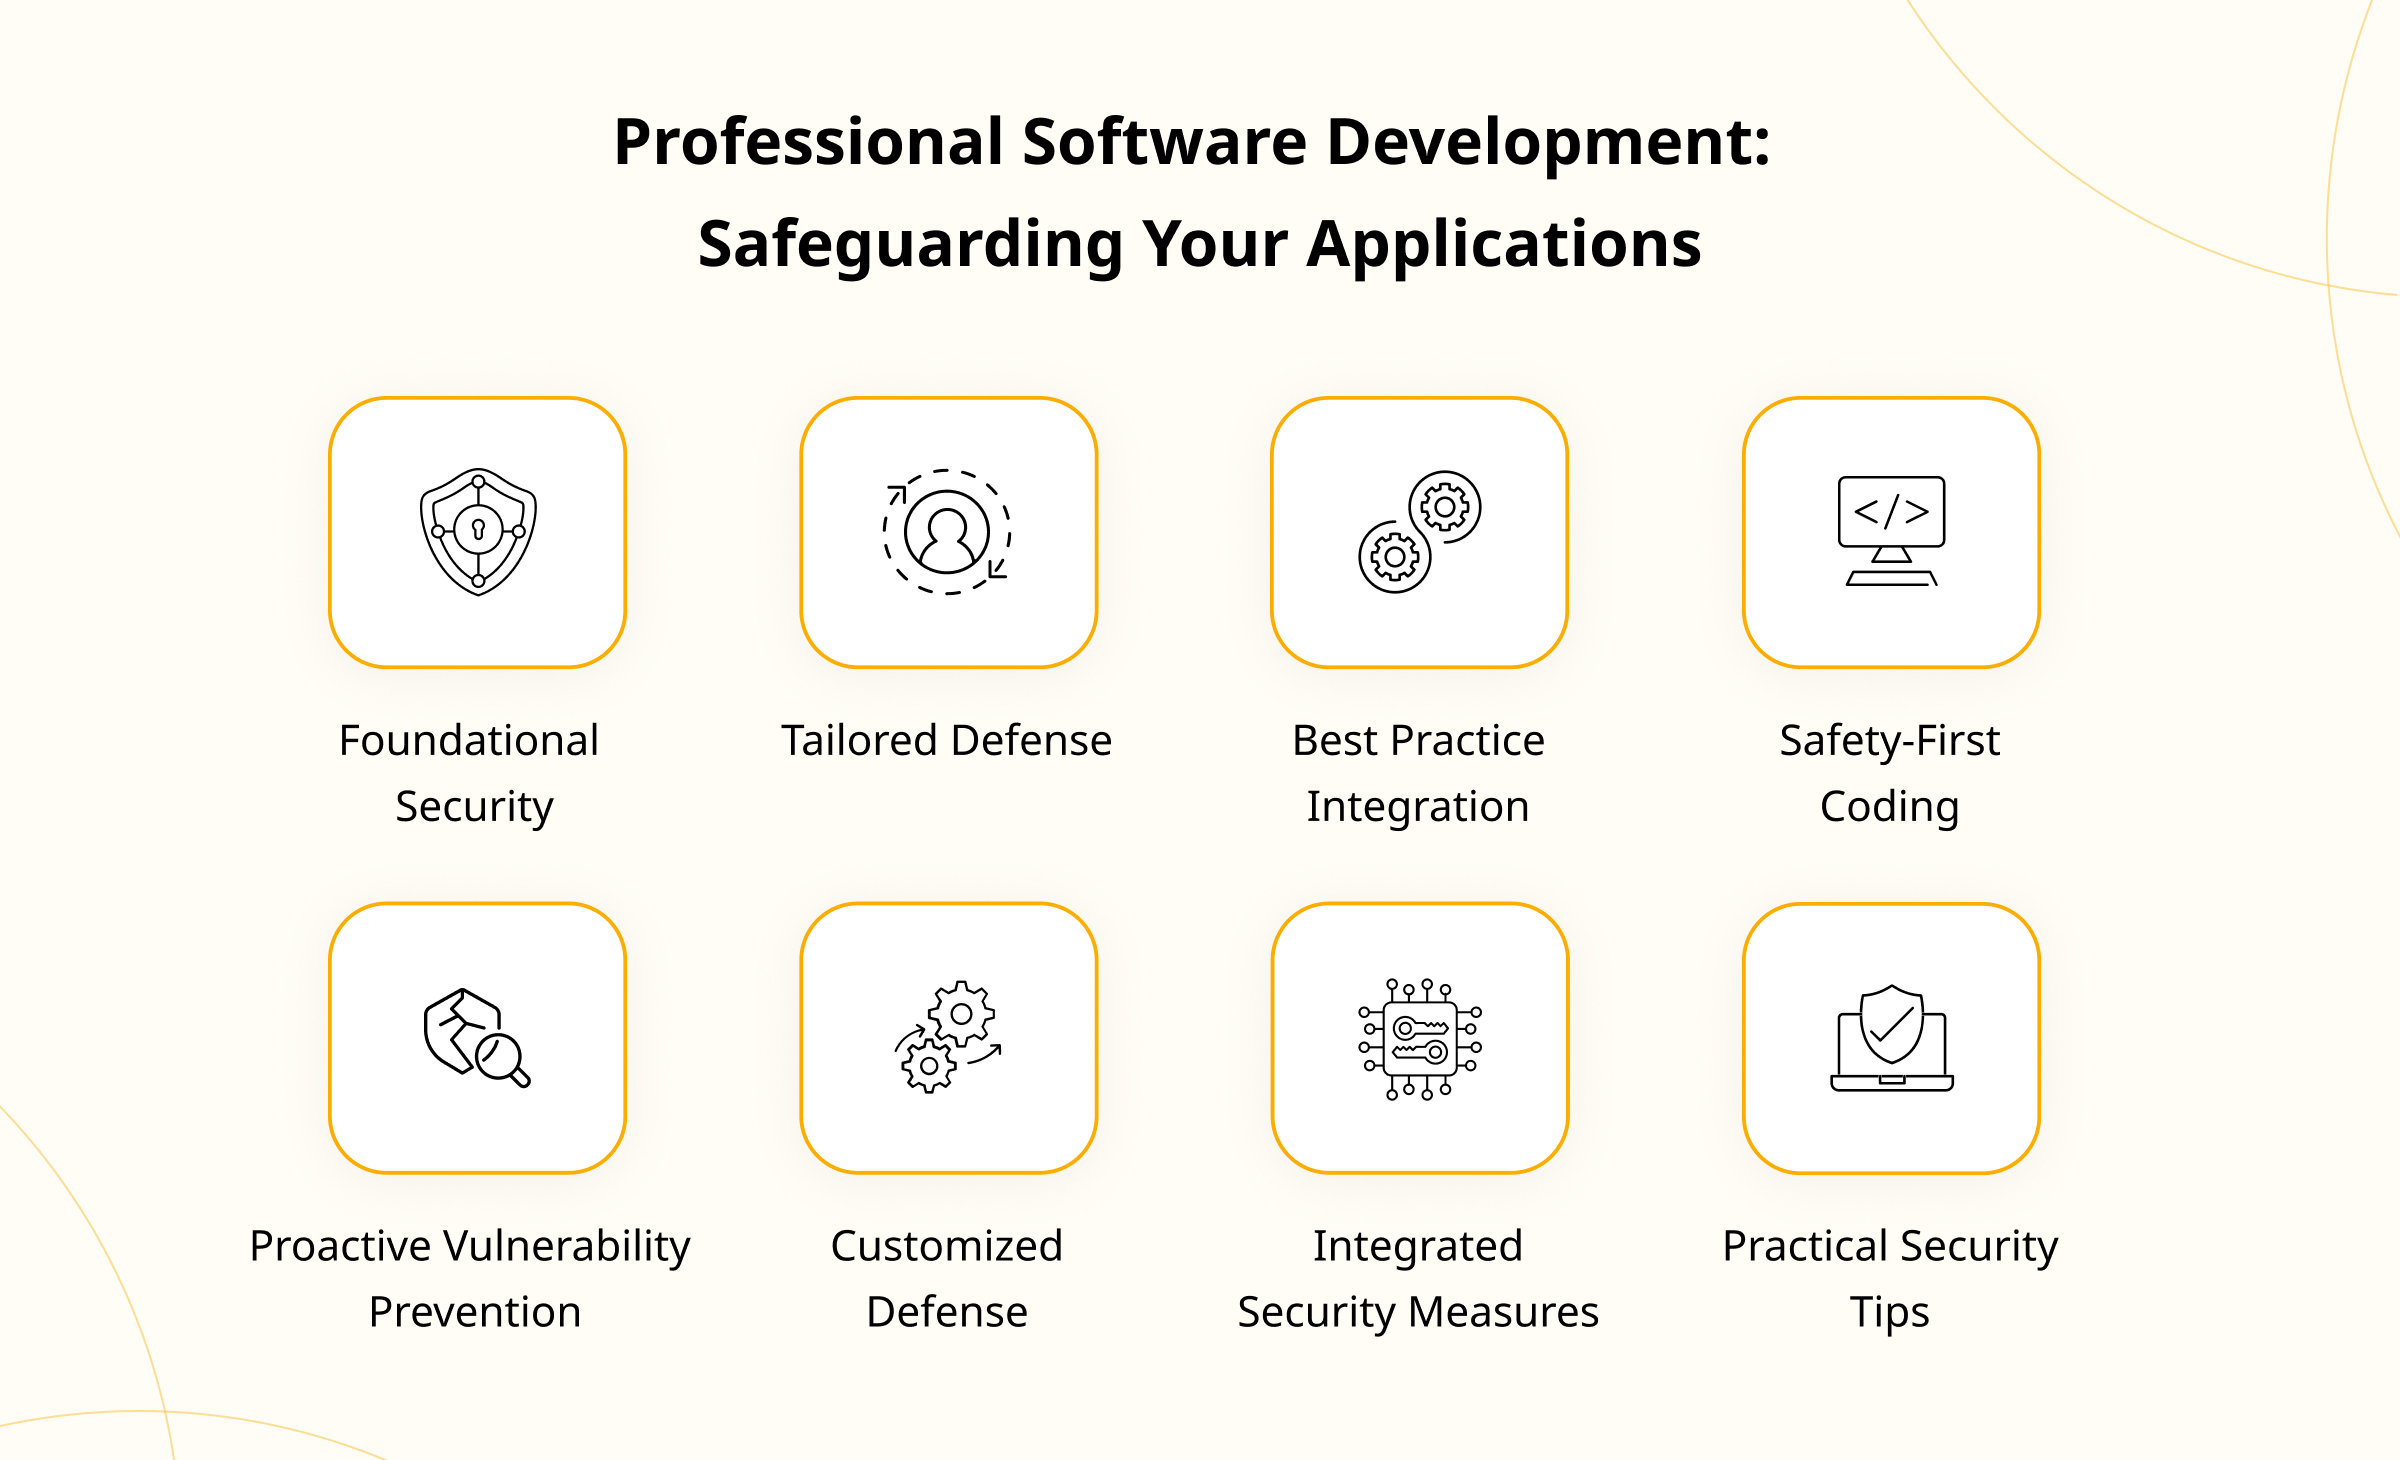 Professional Software Development Helps